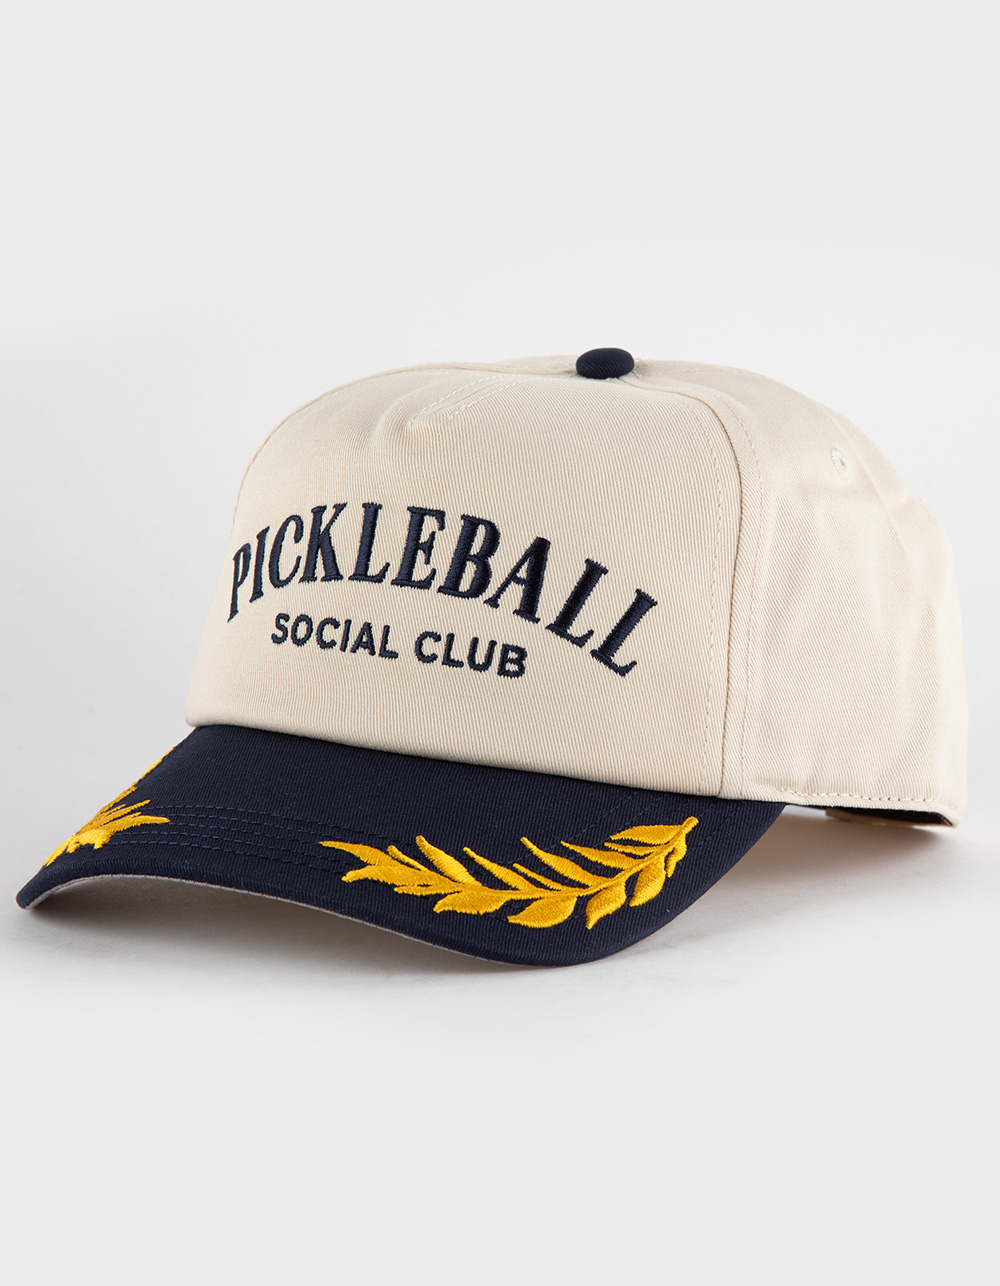 AMERICAN NEEDLE Pickleball Social Club Snapback Hat